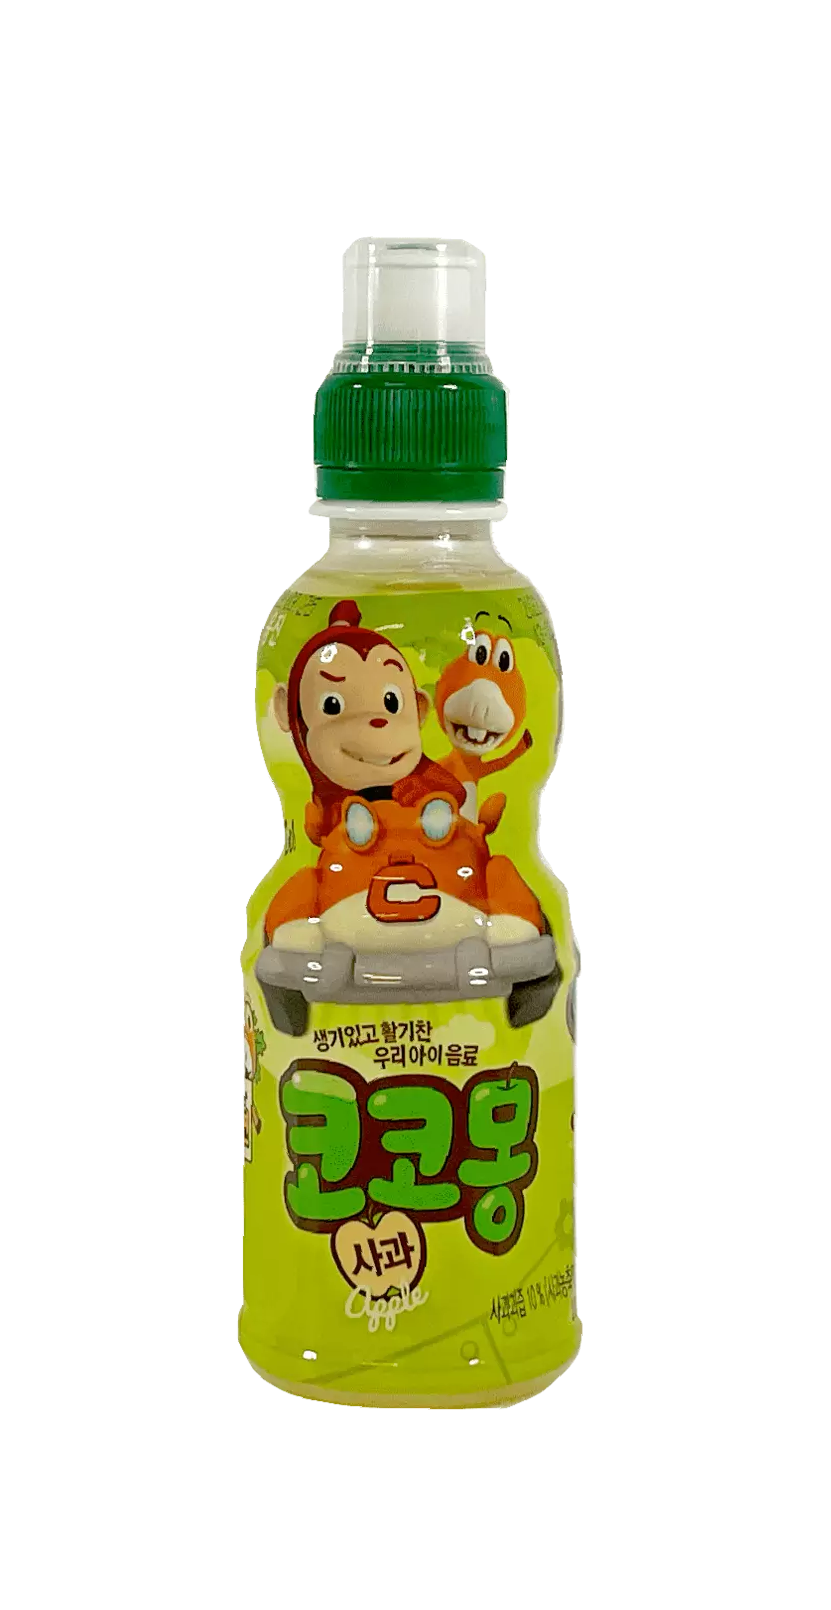 Cocomong 苹果果汁饮料 200ml Woongjin 韩国